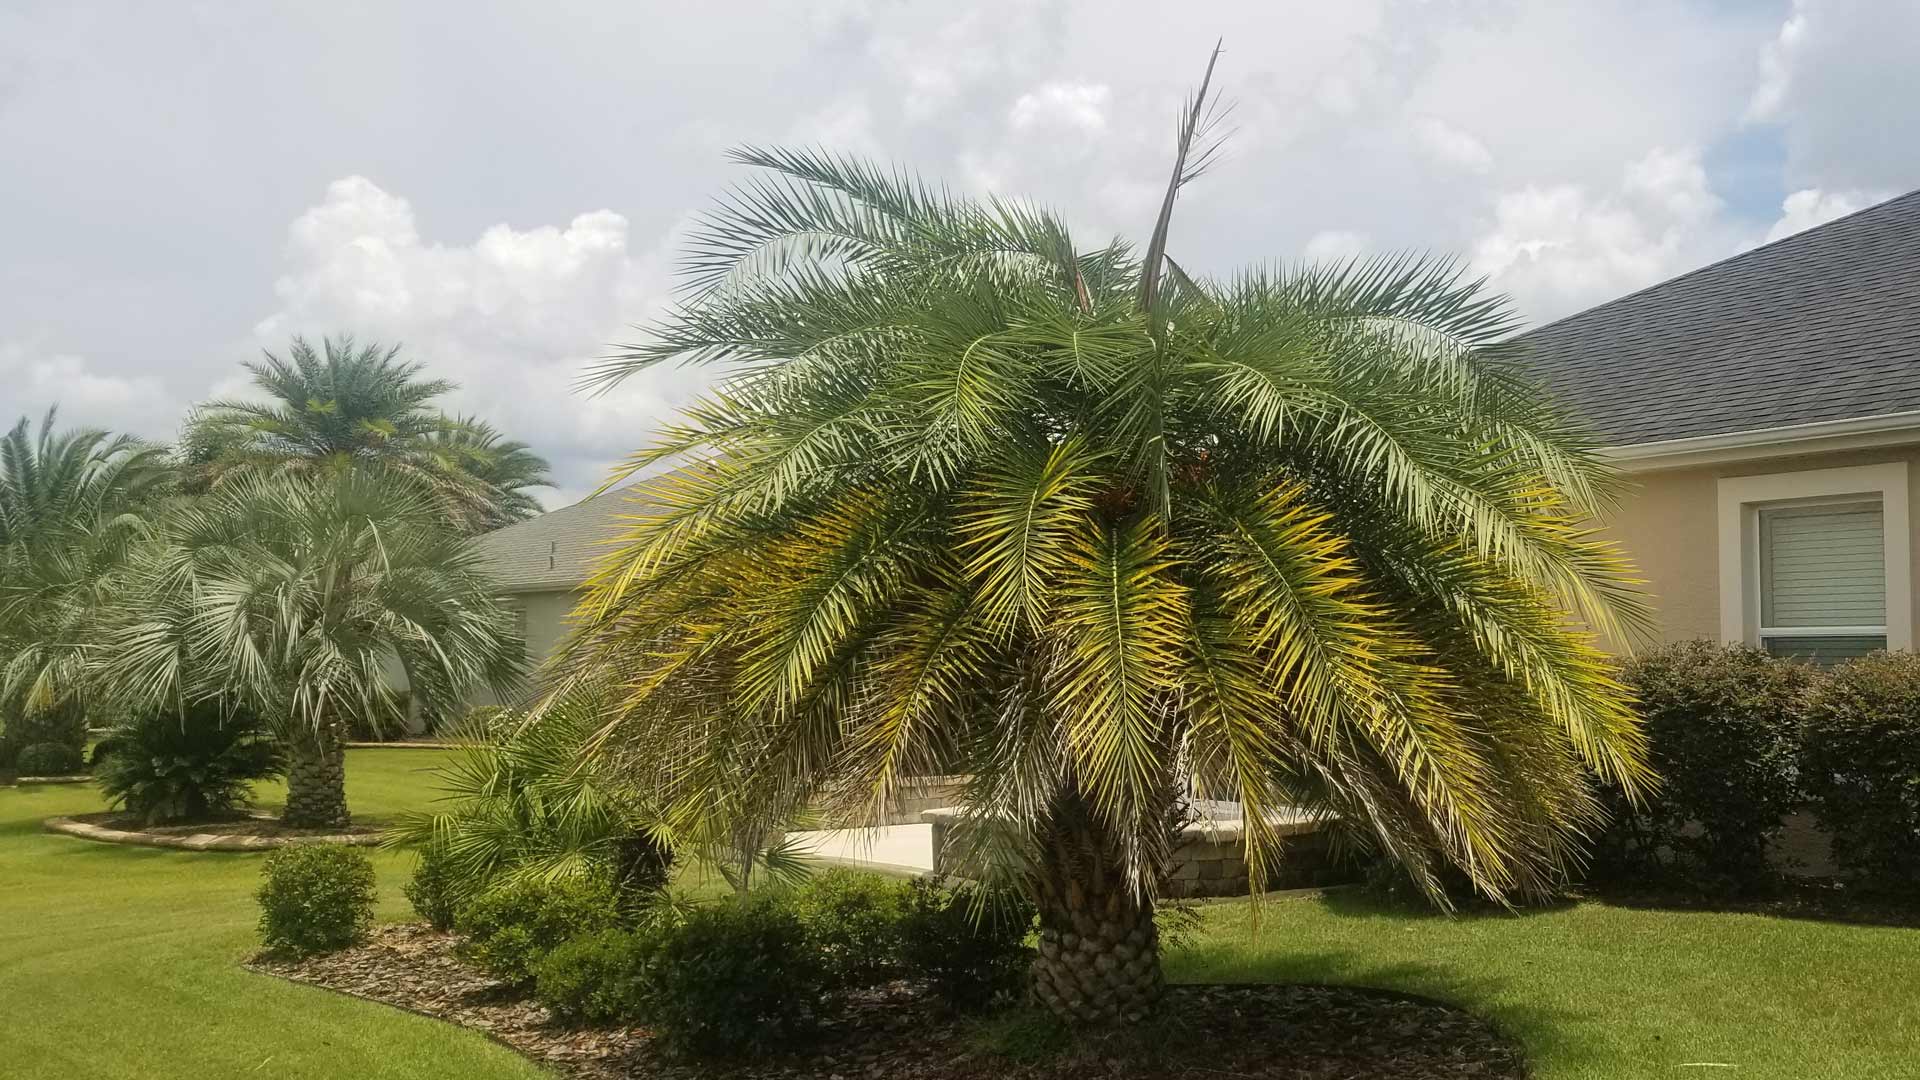 Palms in a landscape bed in Oxford, FL.